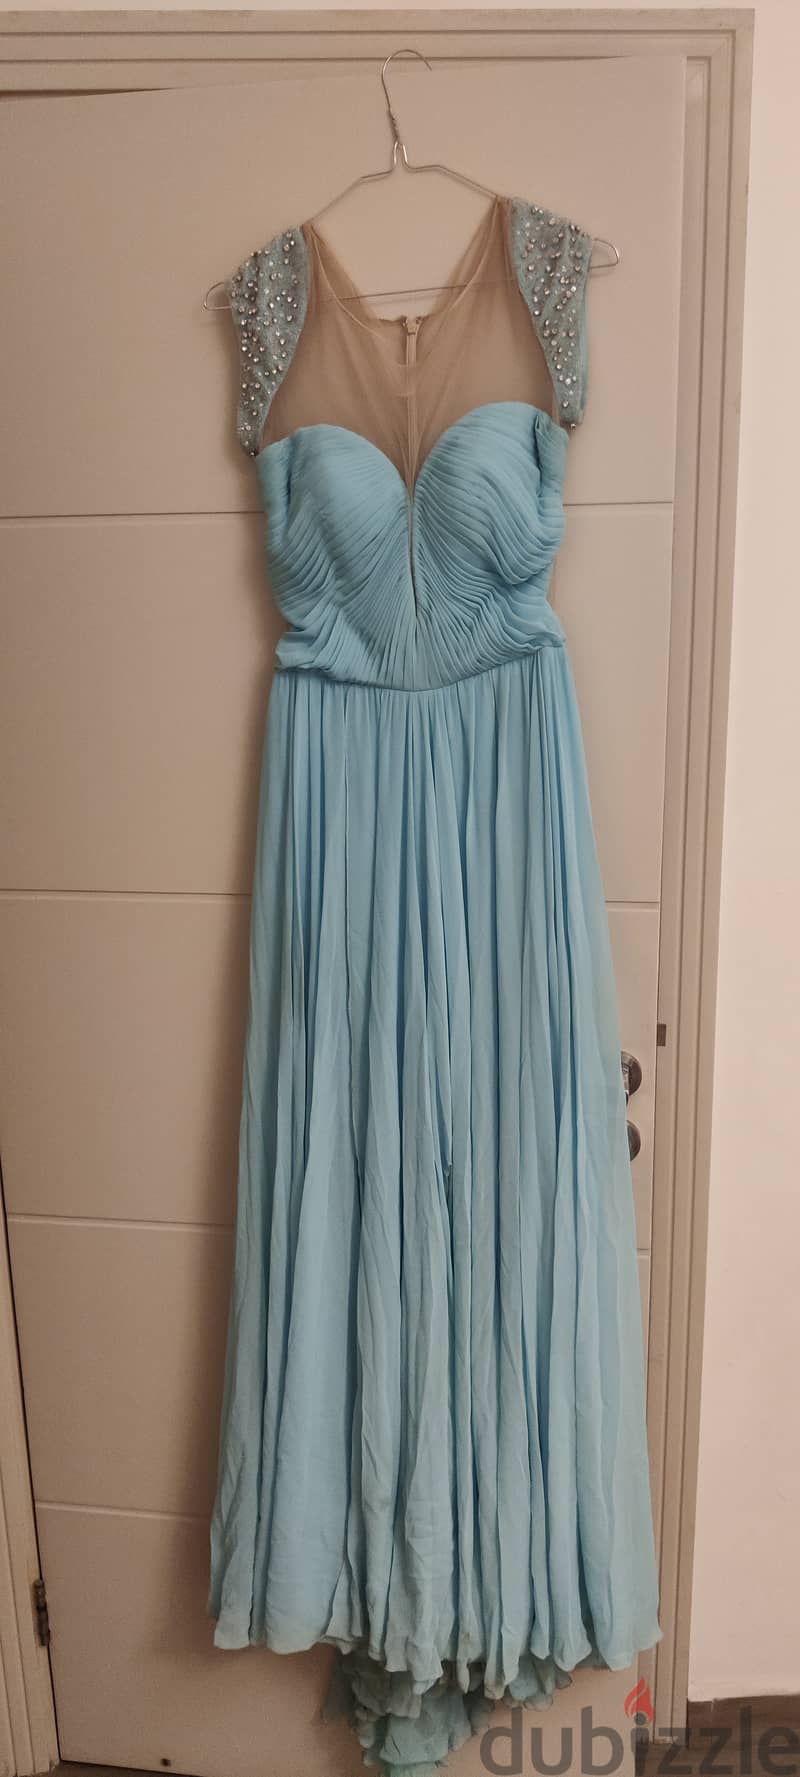 Elegant Light Blue Chiffon Evening Gown - Size Small 0